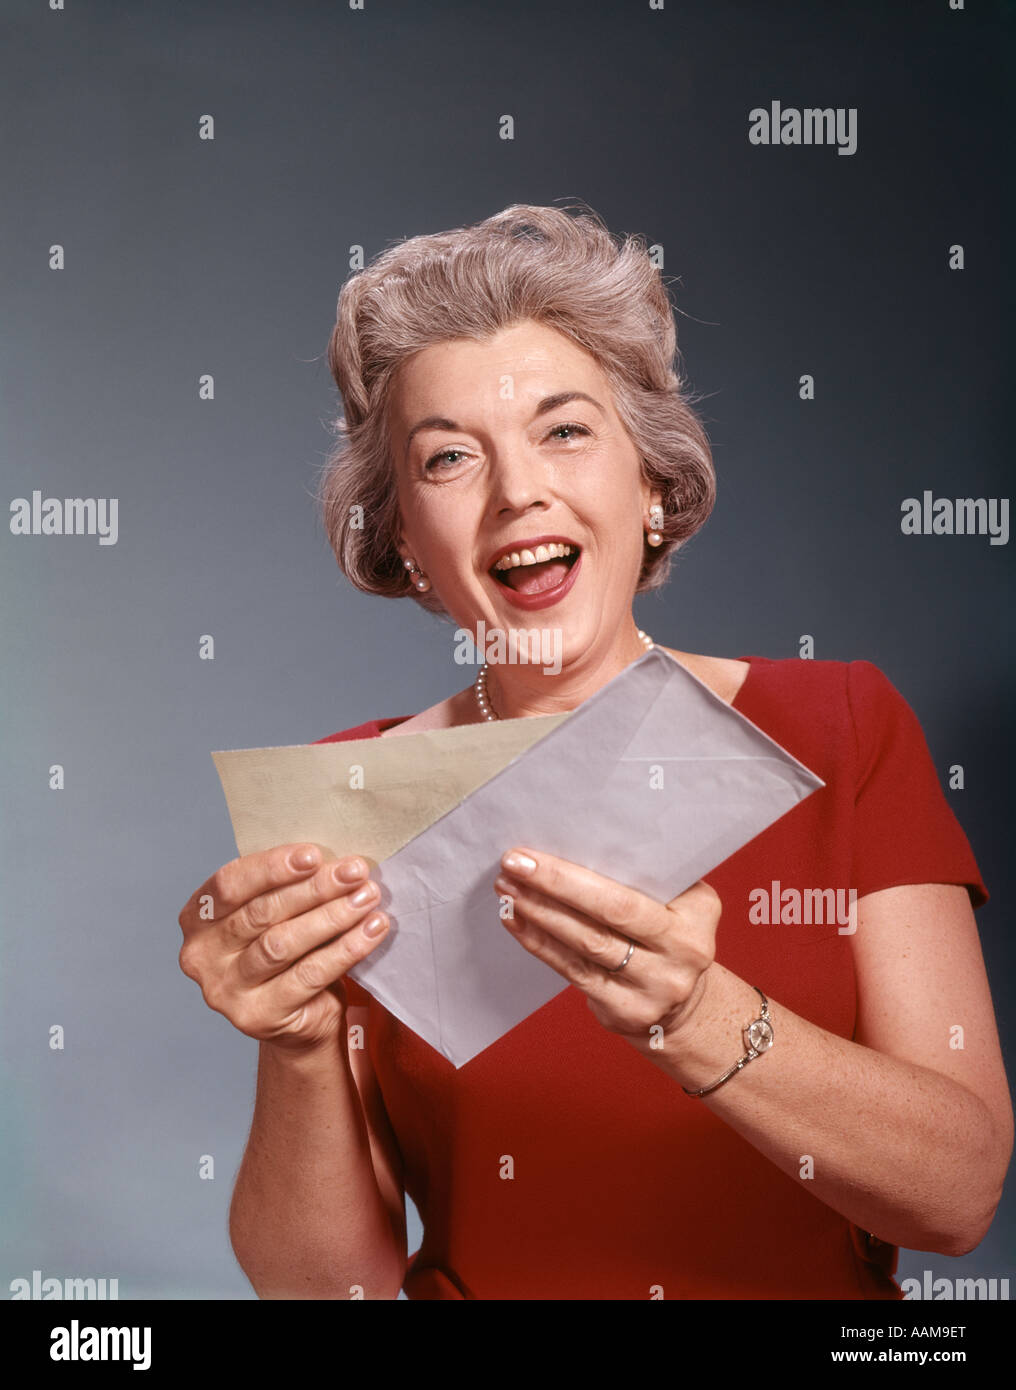 1960s ELDERLY MATURE SENIOR WOMAN OPEN MAIL CHECK LETTER GOOD NEWS SMILING HAPPY RETIREMENT INSURANCE RETRO VINTAGE Stock Photo